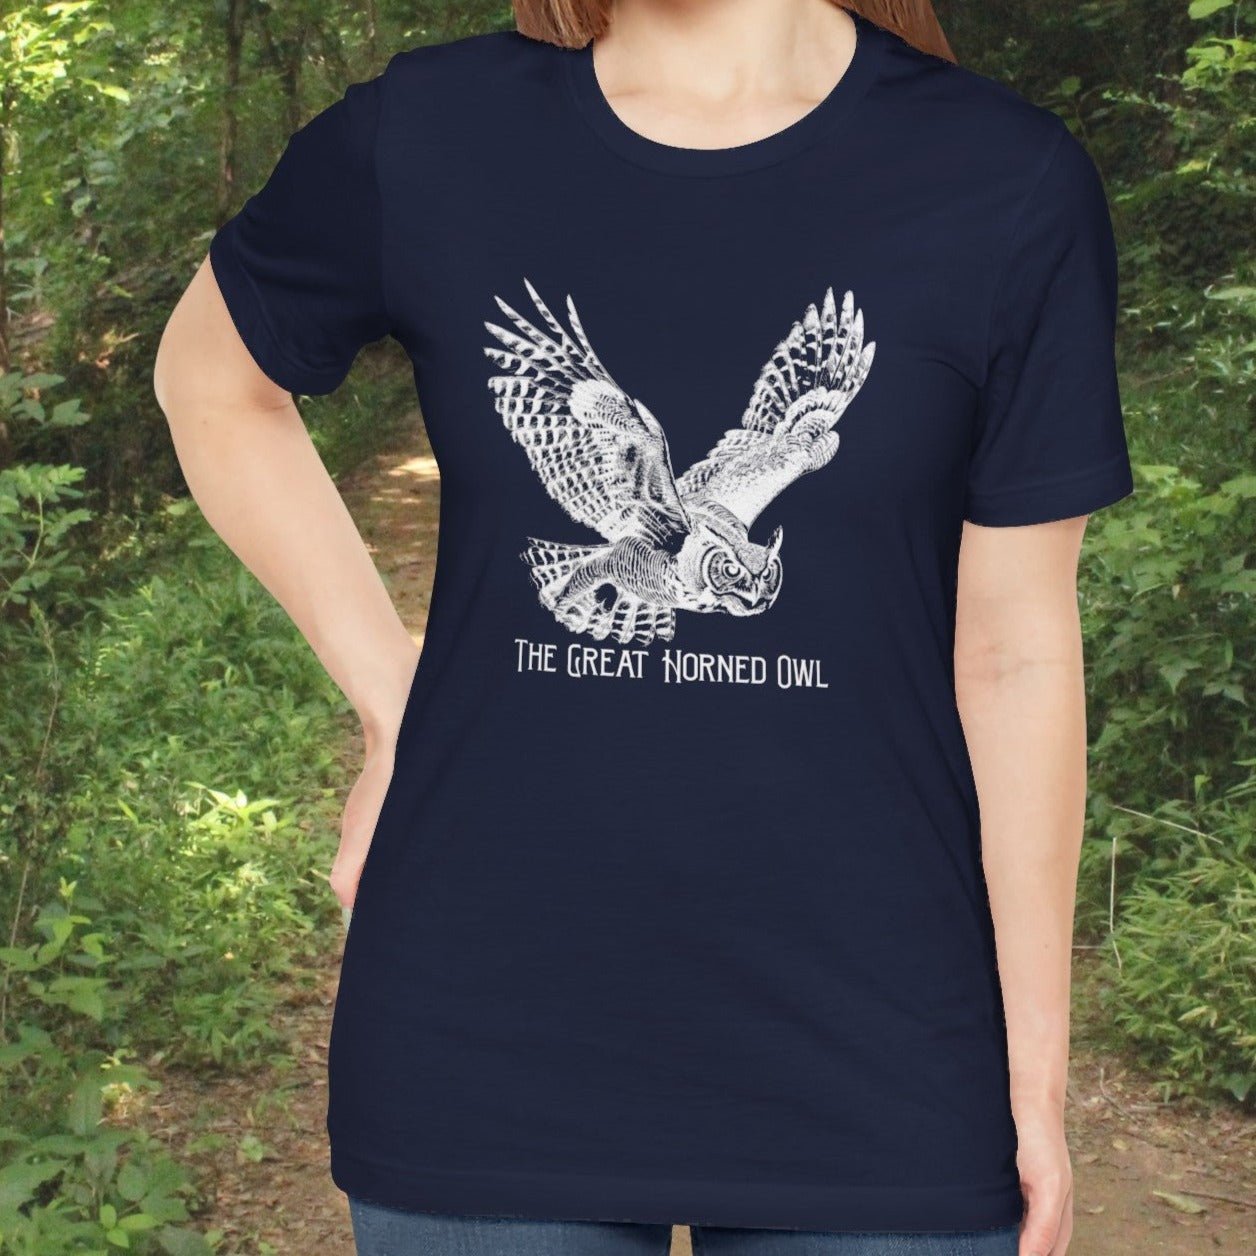 Bird Wildlife Tshirt, The Great Horned Owl Artwork on Tee, Protect National Parks - FlooredByArt